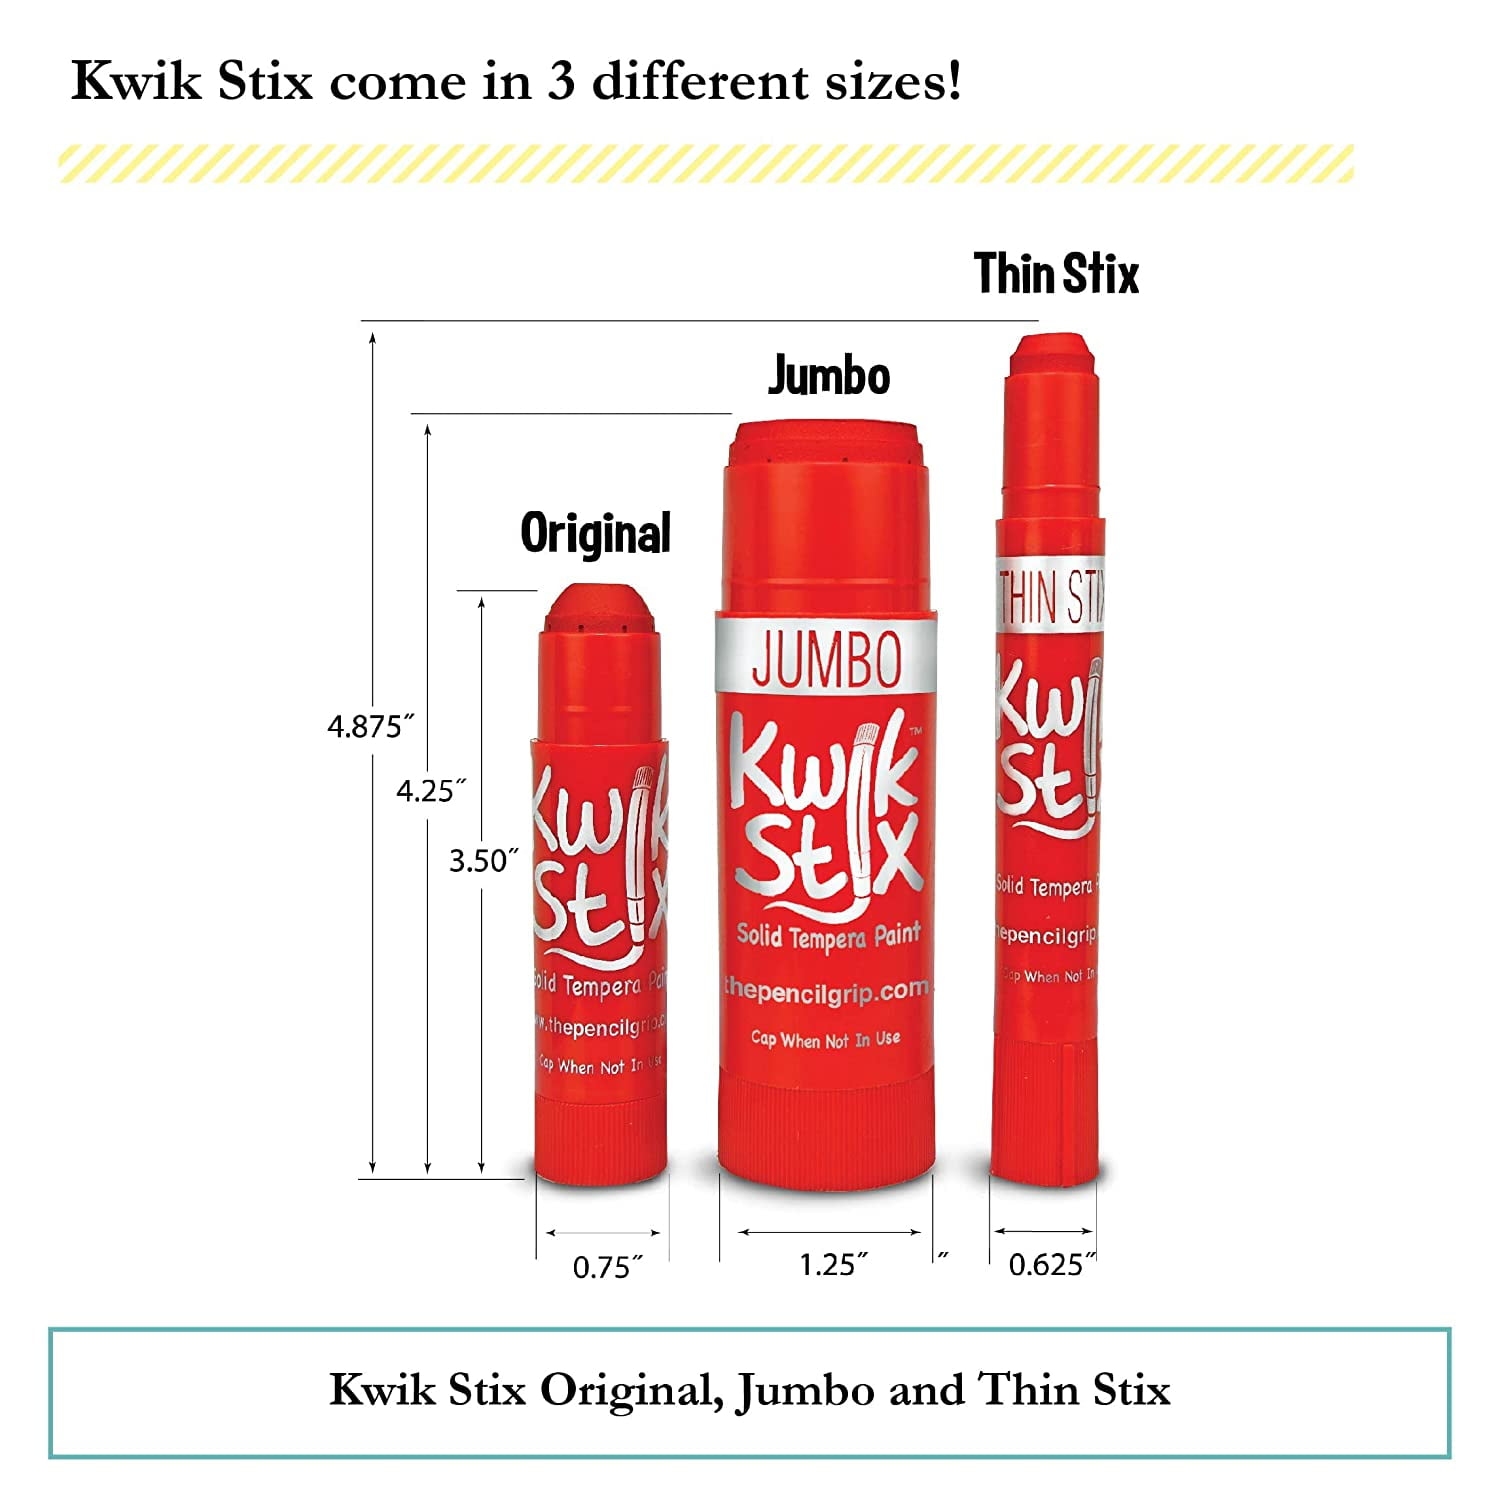 Kwik Stix: Solid Tempera Paint Sticks - Sugar, Spice and Family Life